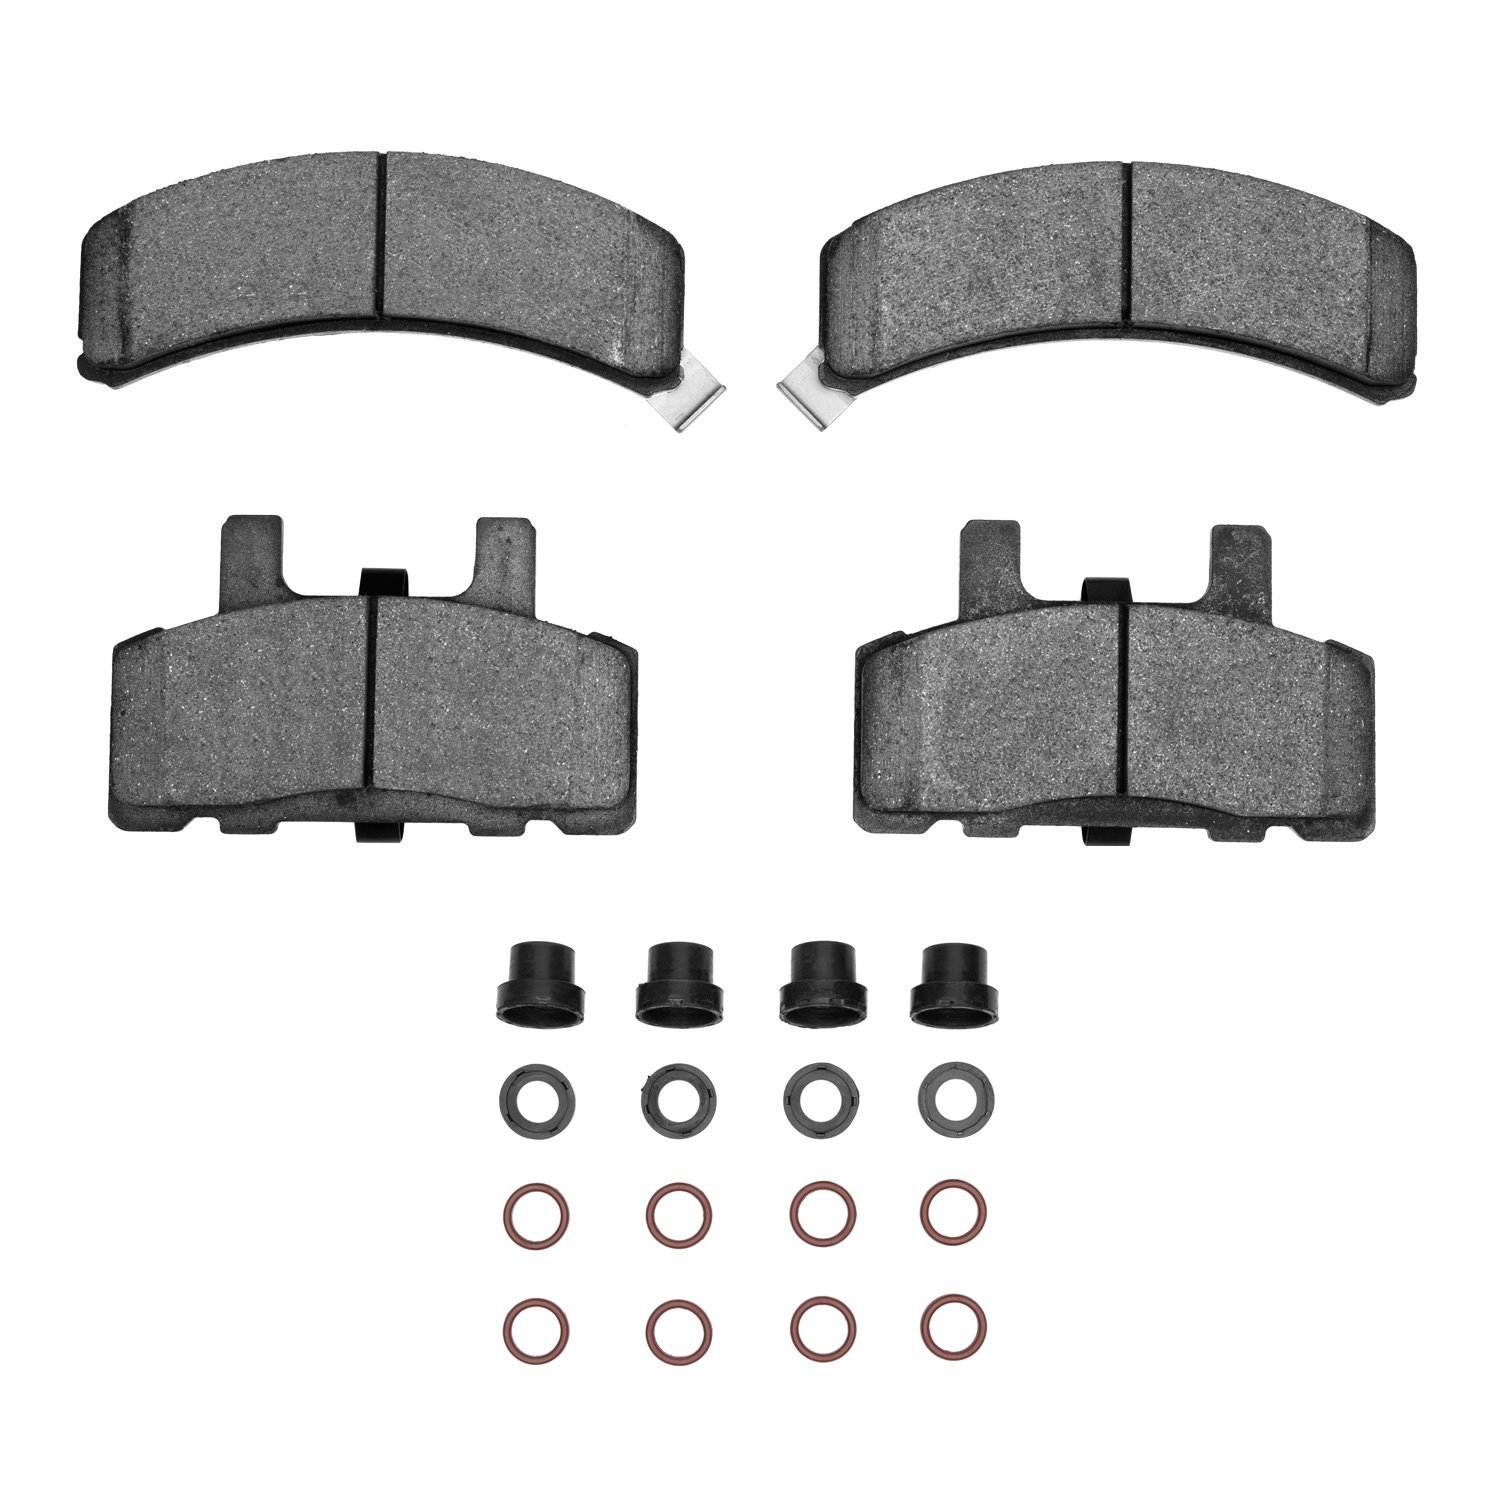 Semi-Metallic Brake Pads & Hardware Kit, 1988-2002 Fits Multiple Makes/Models, Position: Front